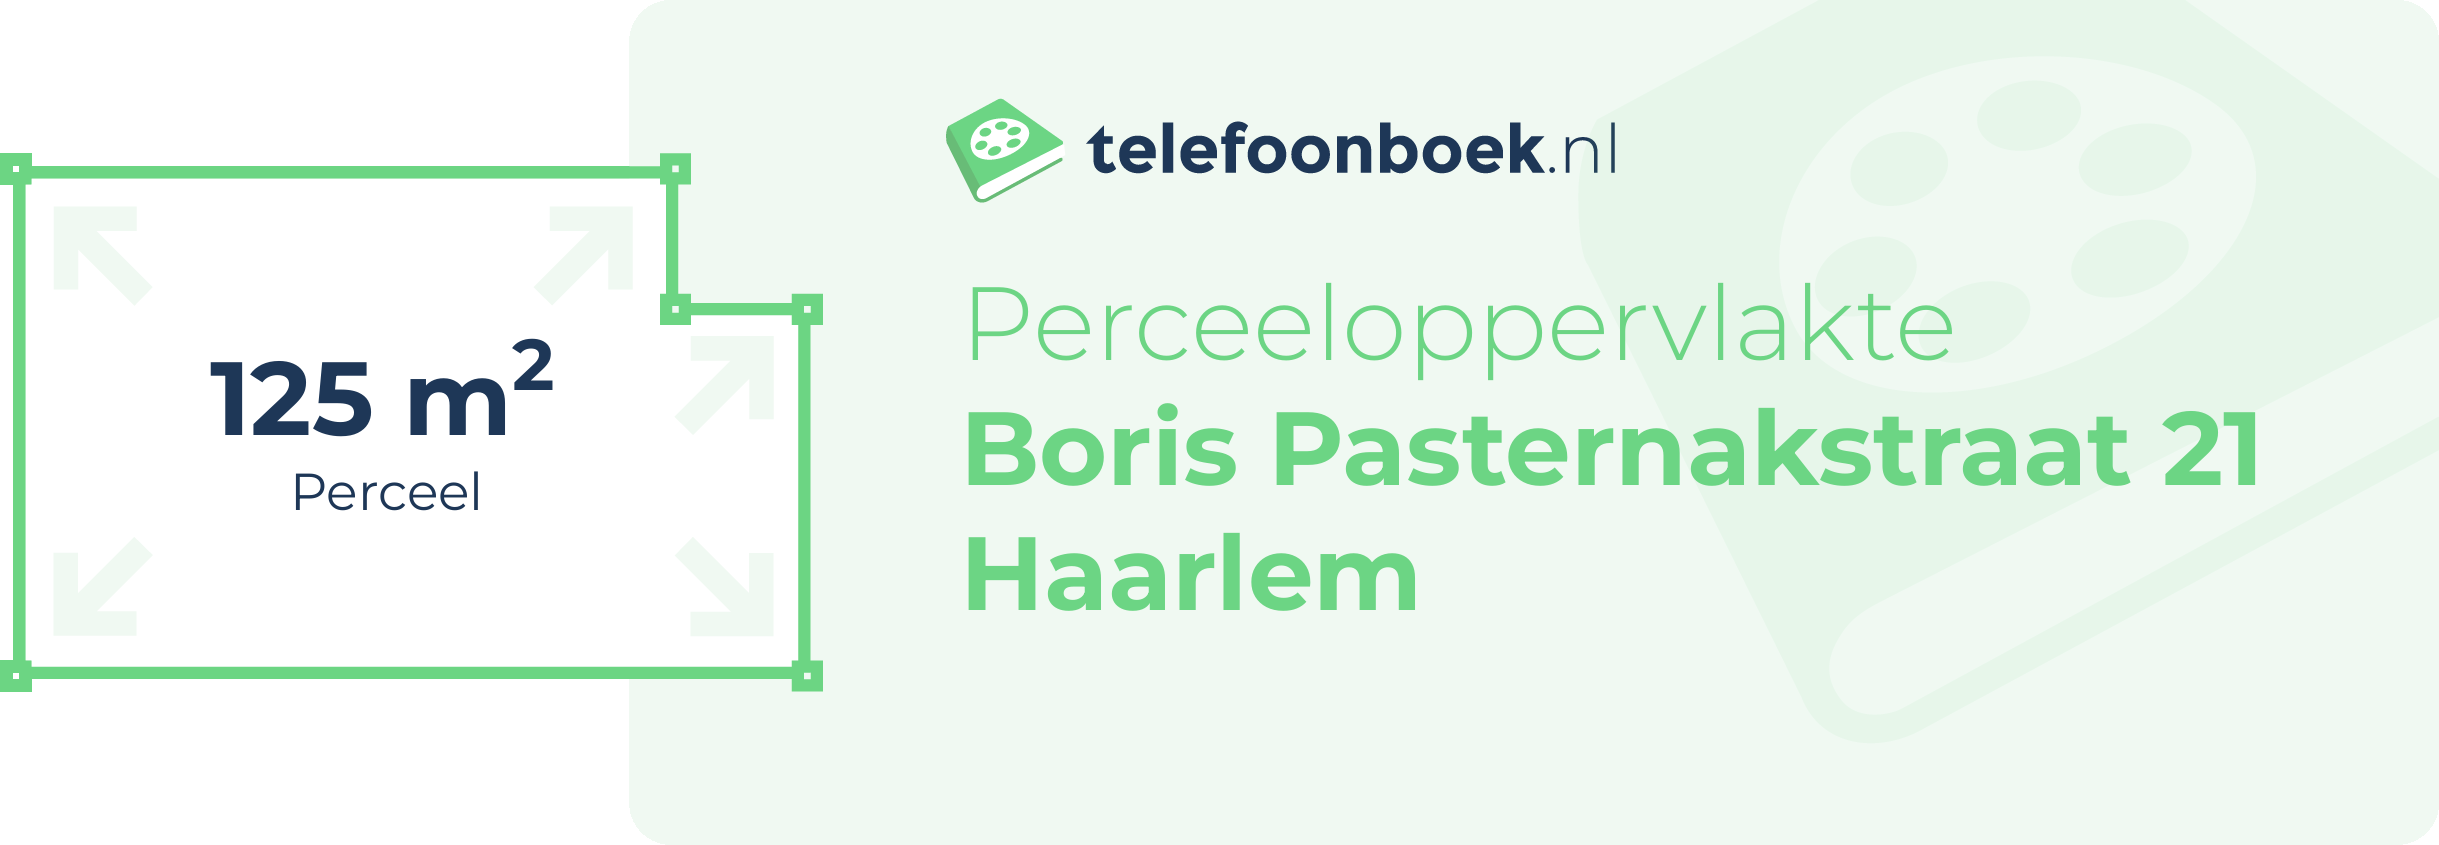 Perceeloppervlakte Boris Pasternakstraat 21 Haarlem